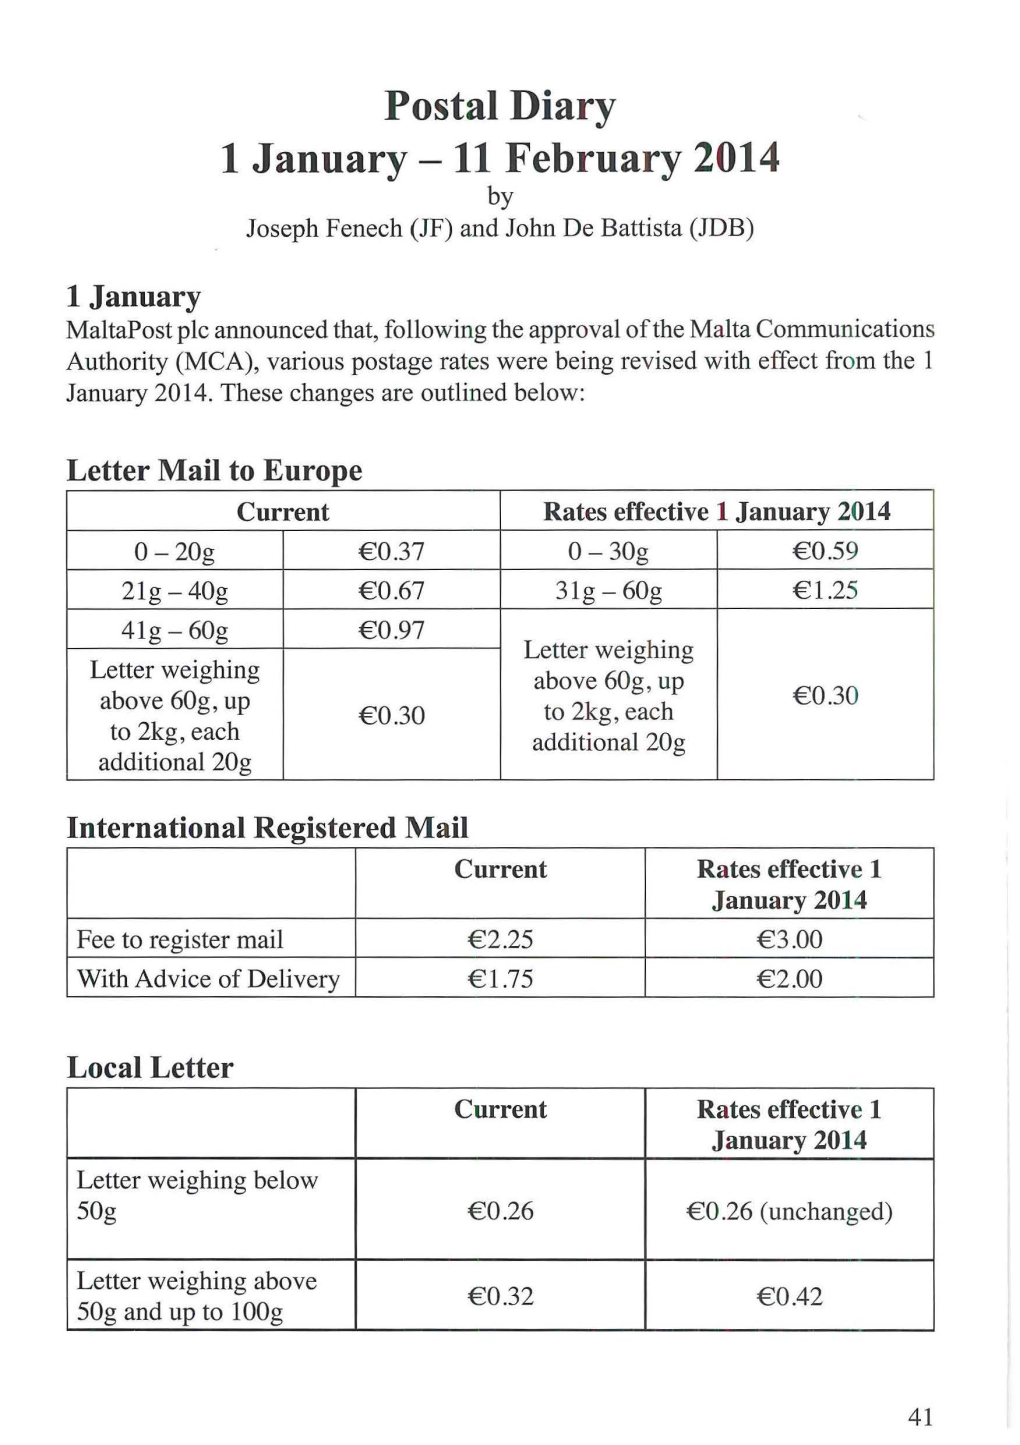 Postal Diary 1 January -11 February 2014 by Joseph Fenech (JF) and John De Battista (JDB)